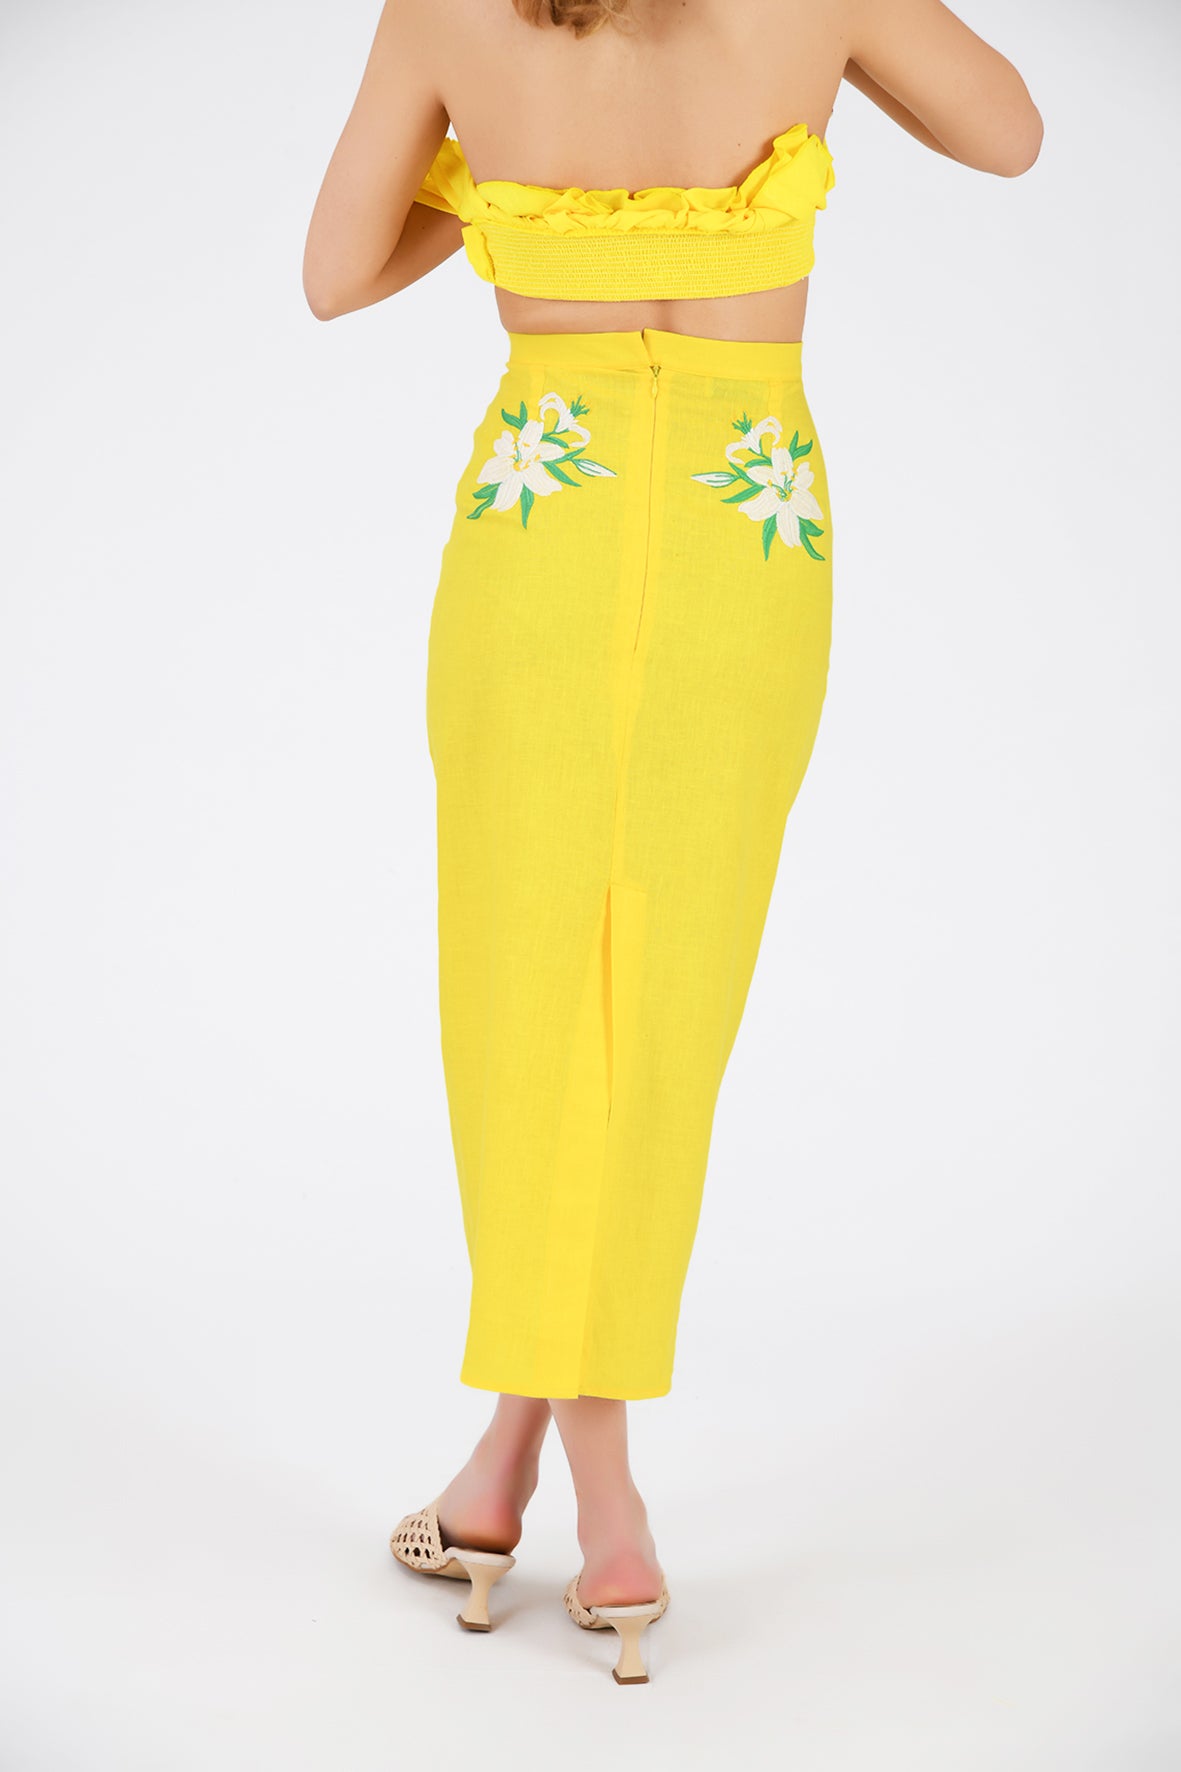 Arina Skirt (Wanga Collection) Back VIew in Bright Yellow